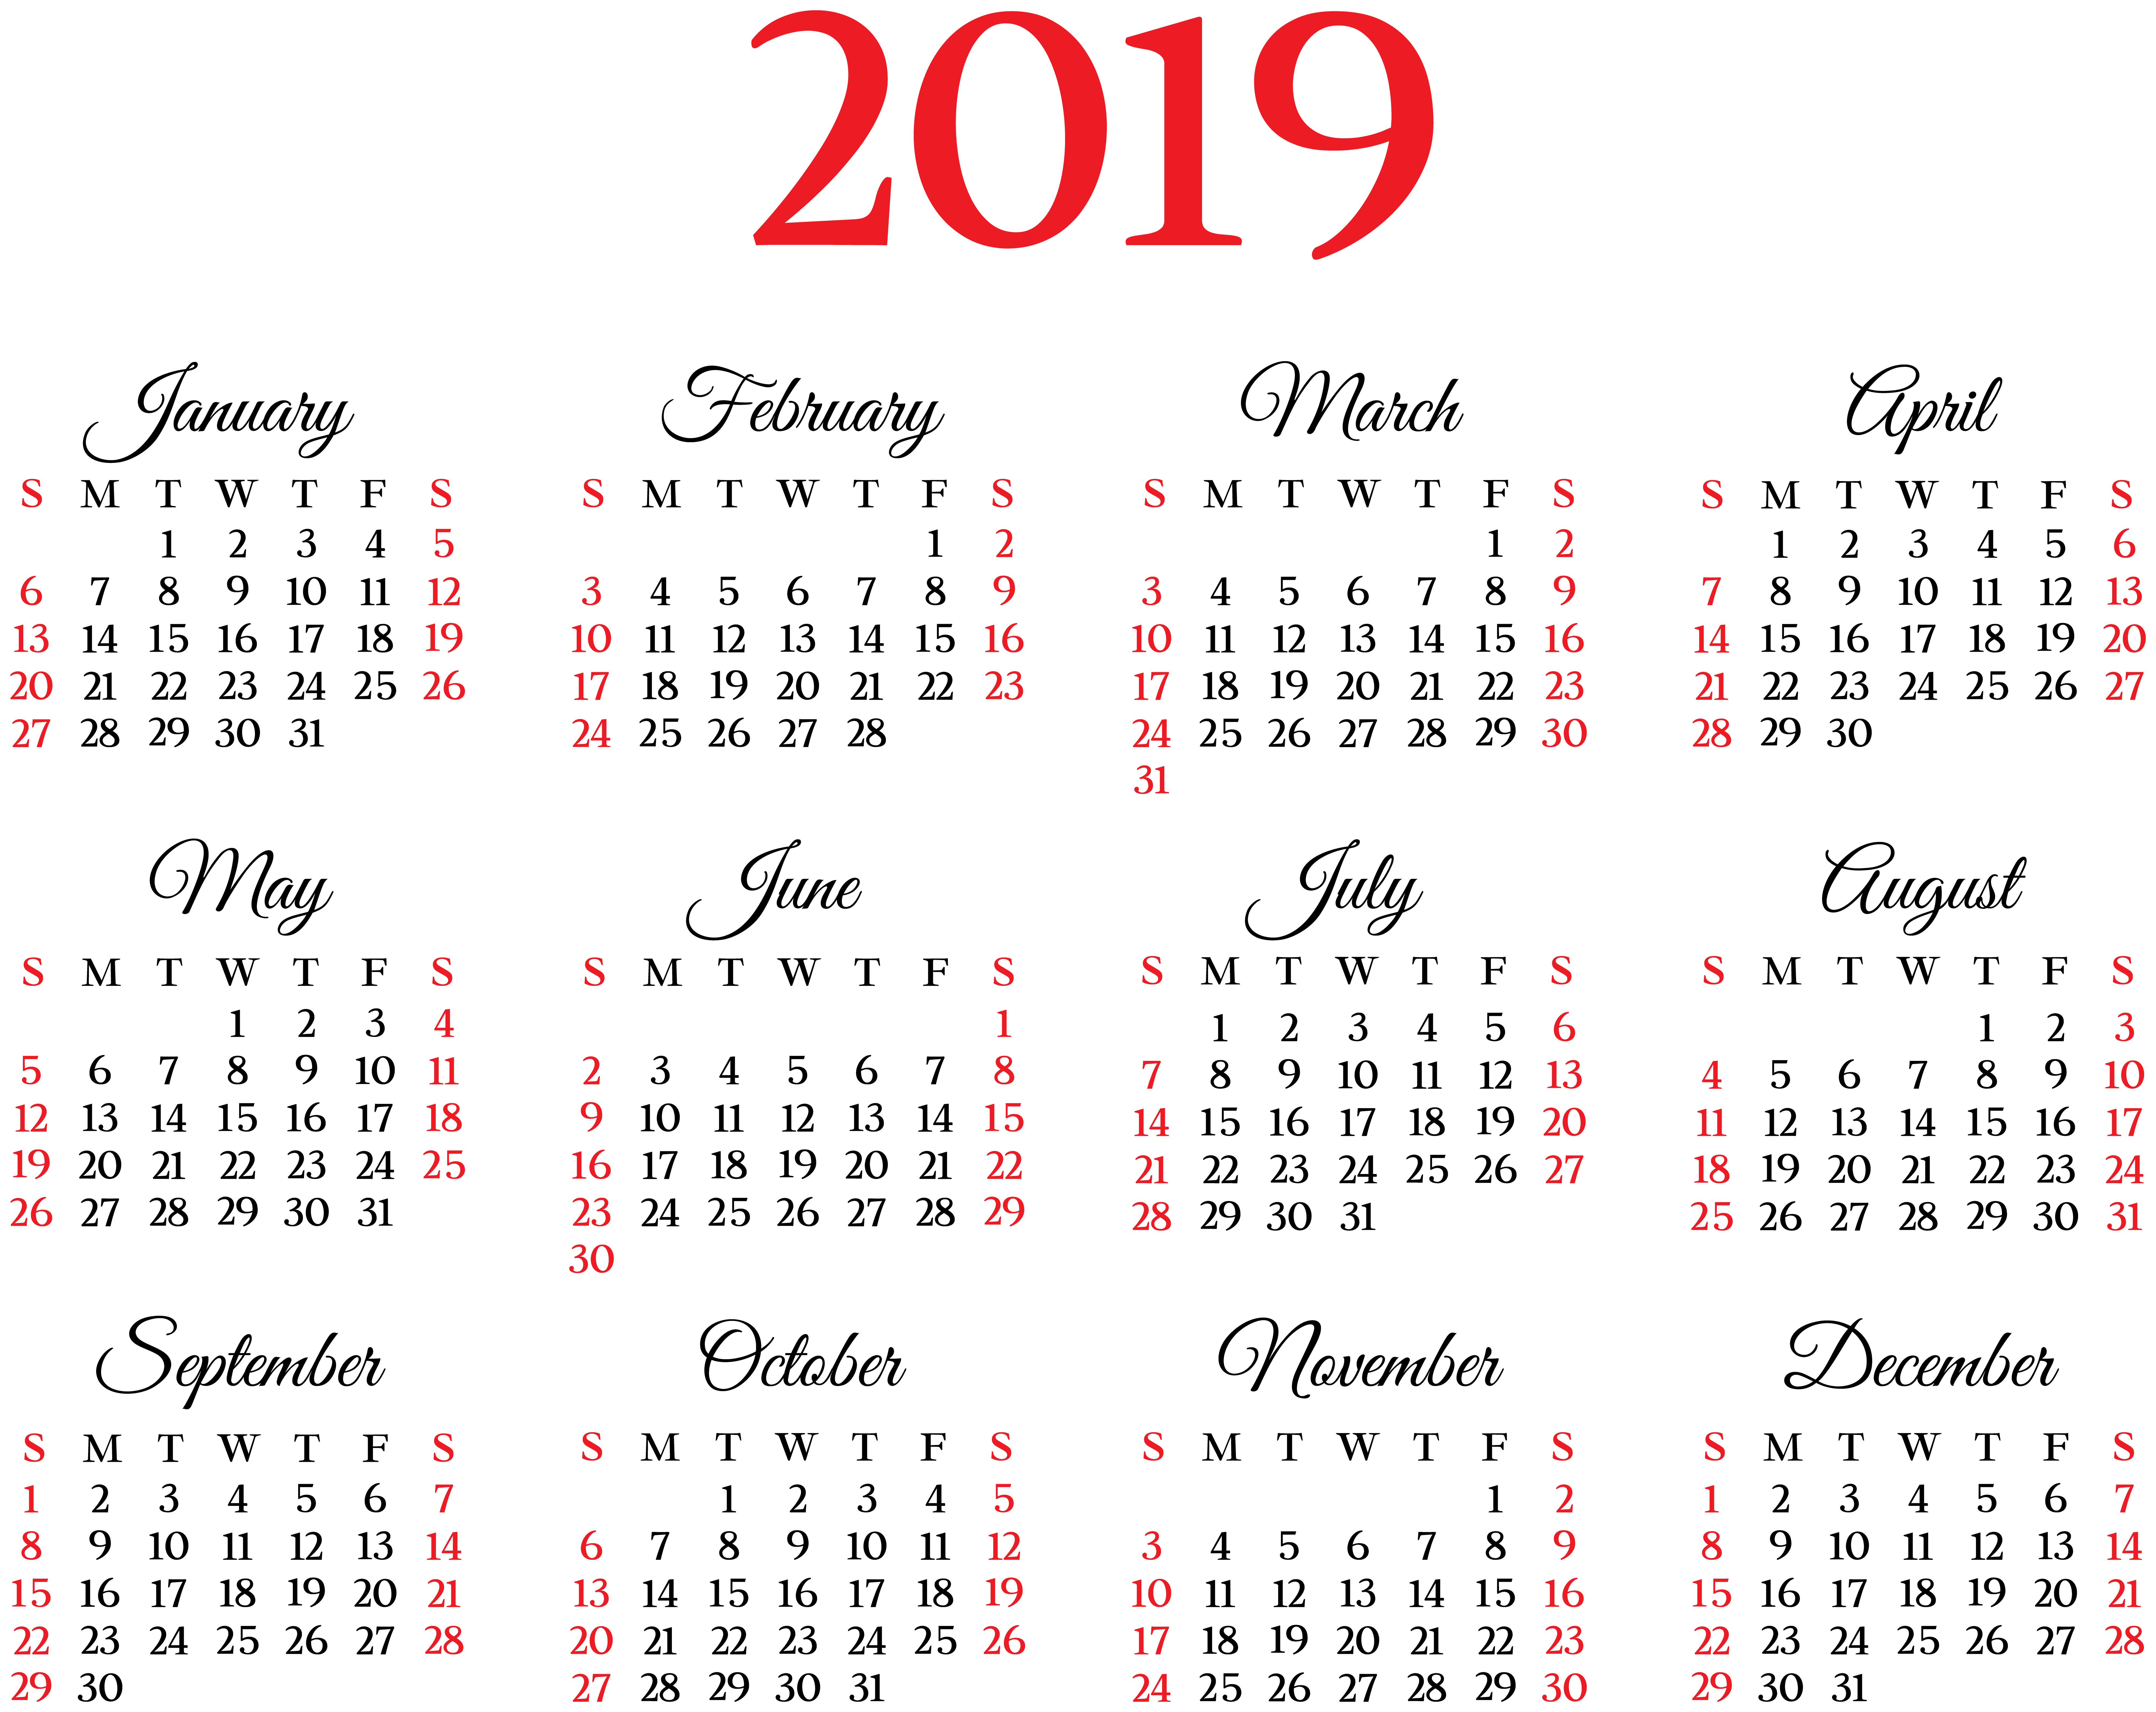 2019 Calendar Image